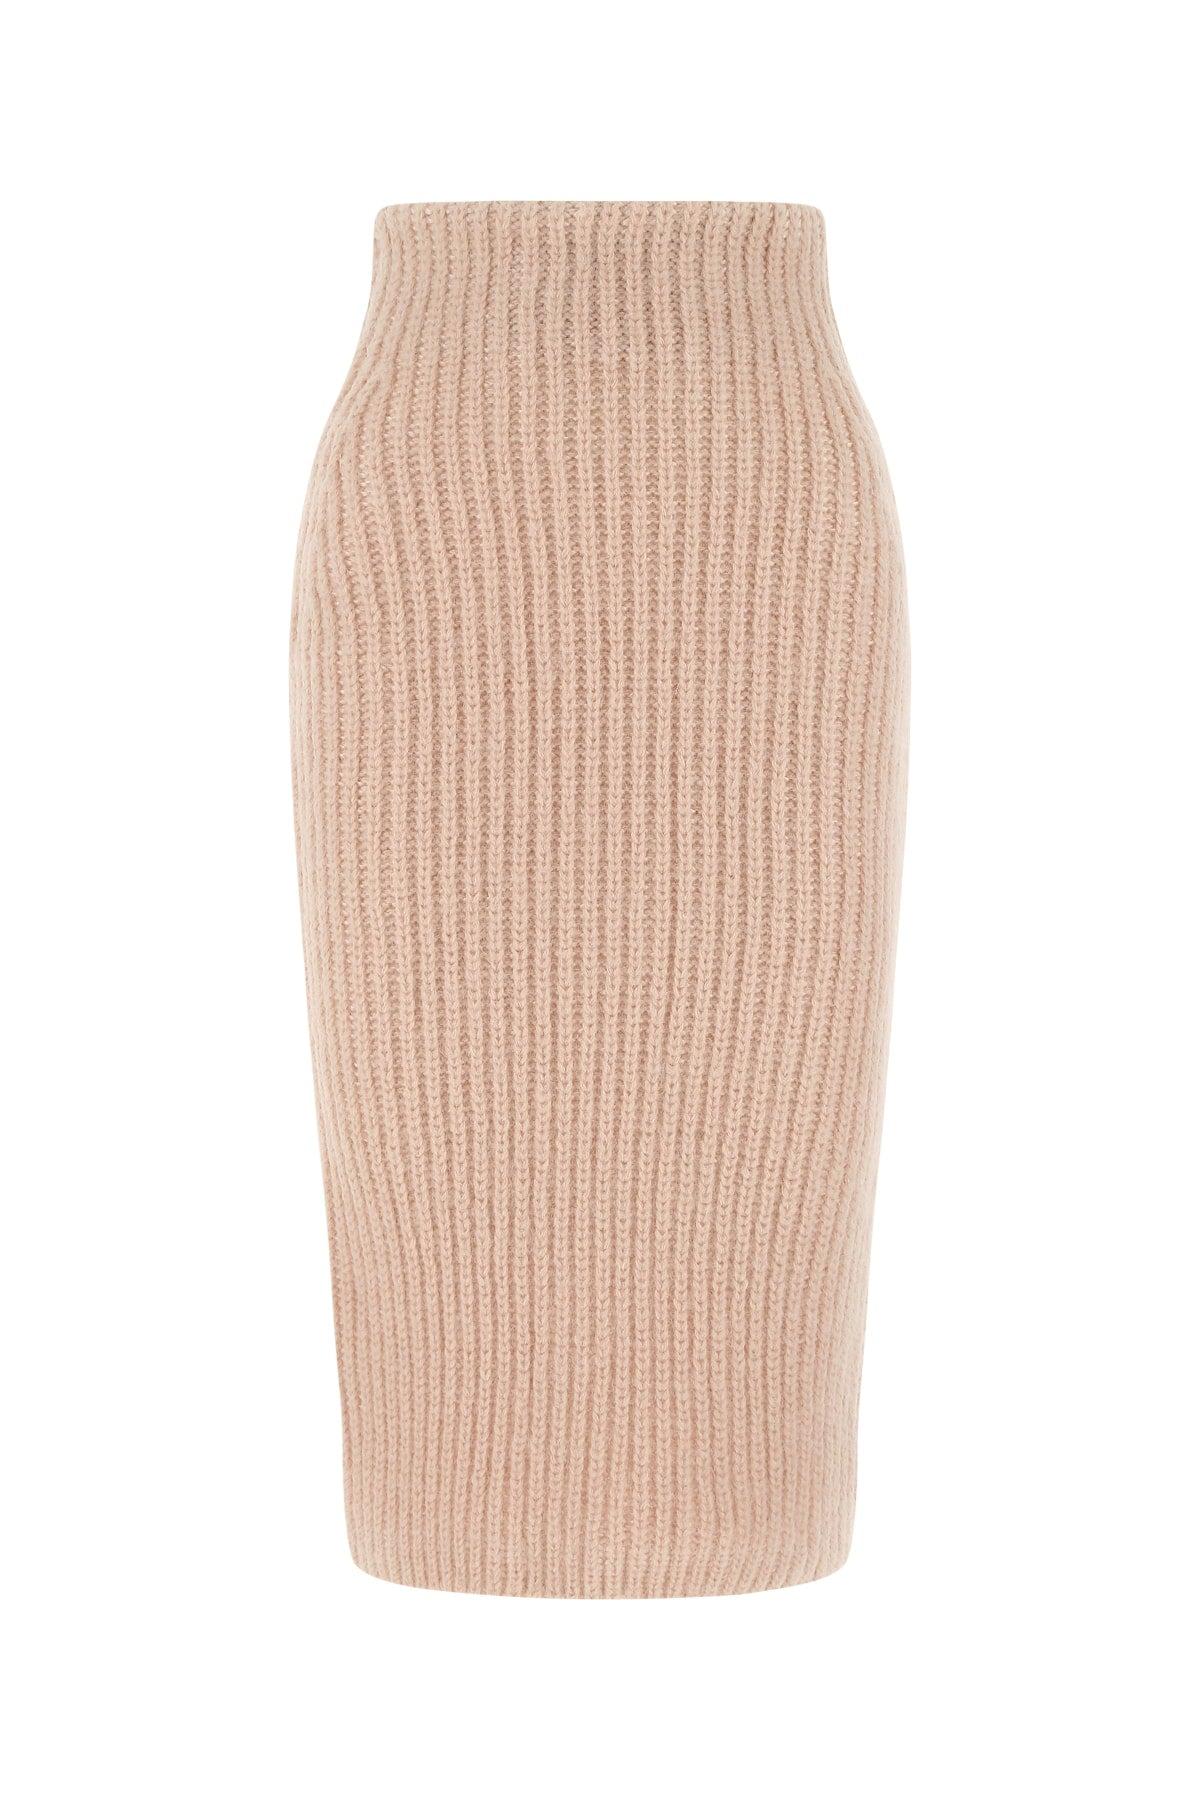 Fendi High-rise Ribbed Knit Pencil Skirt